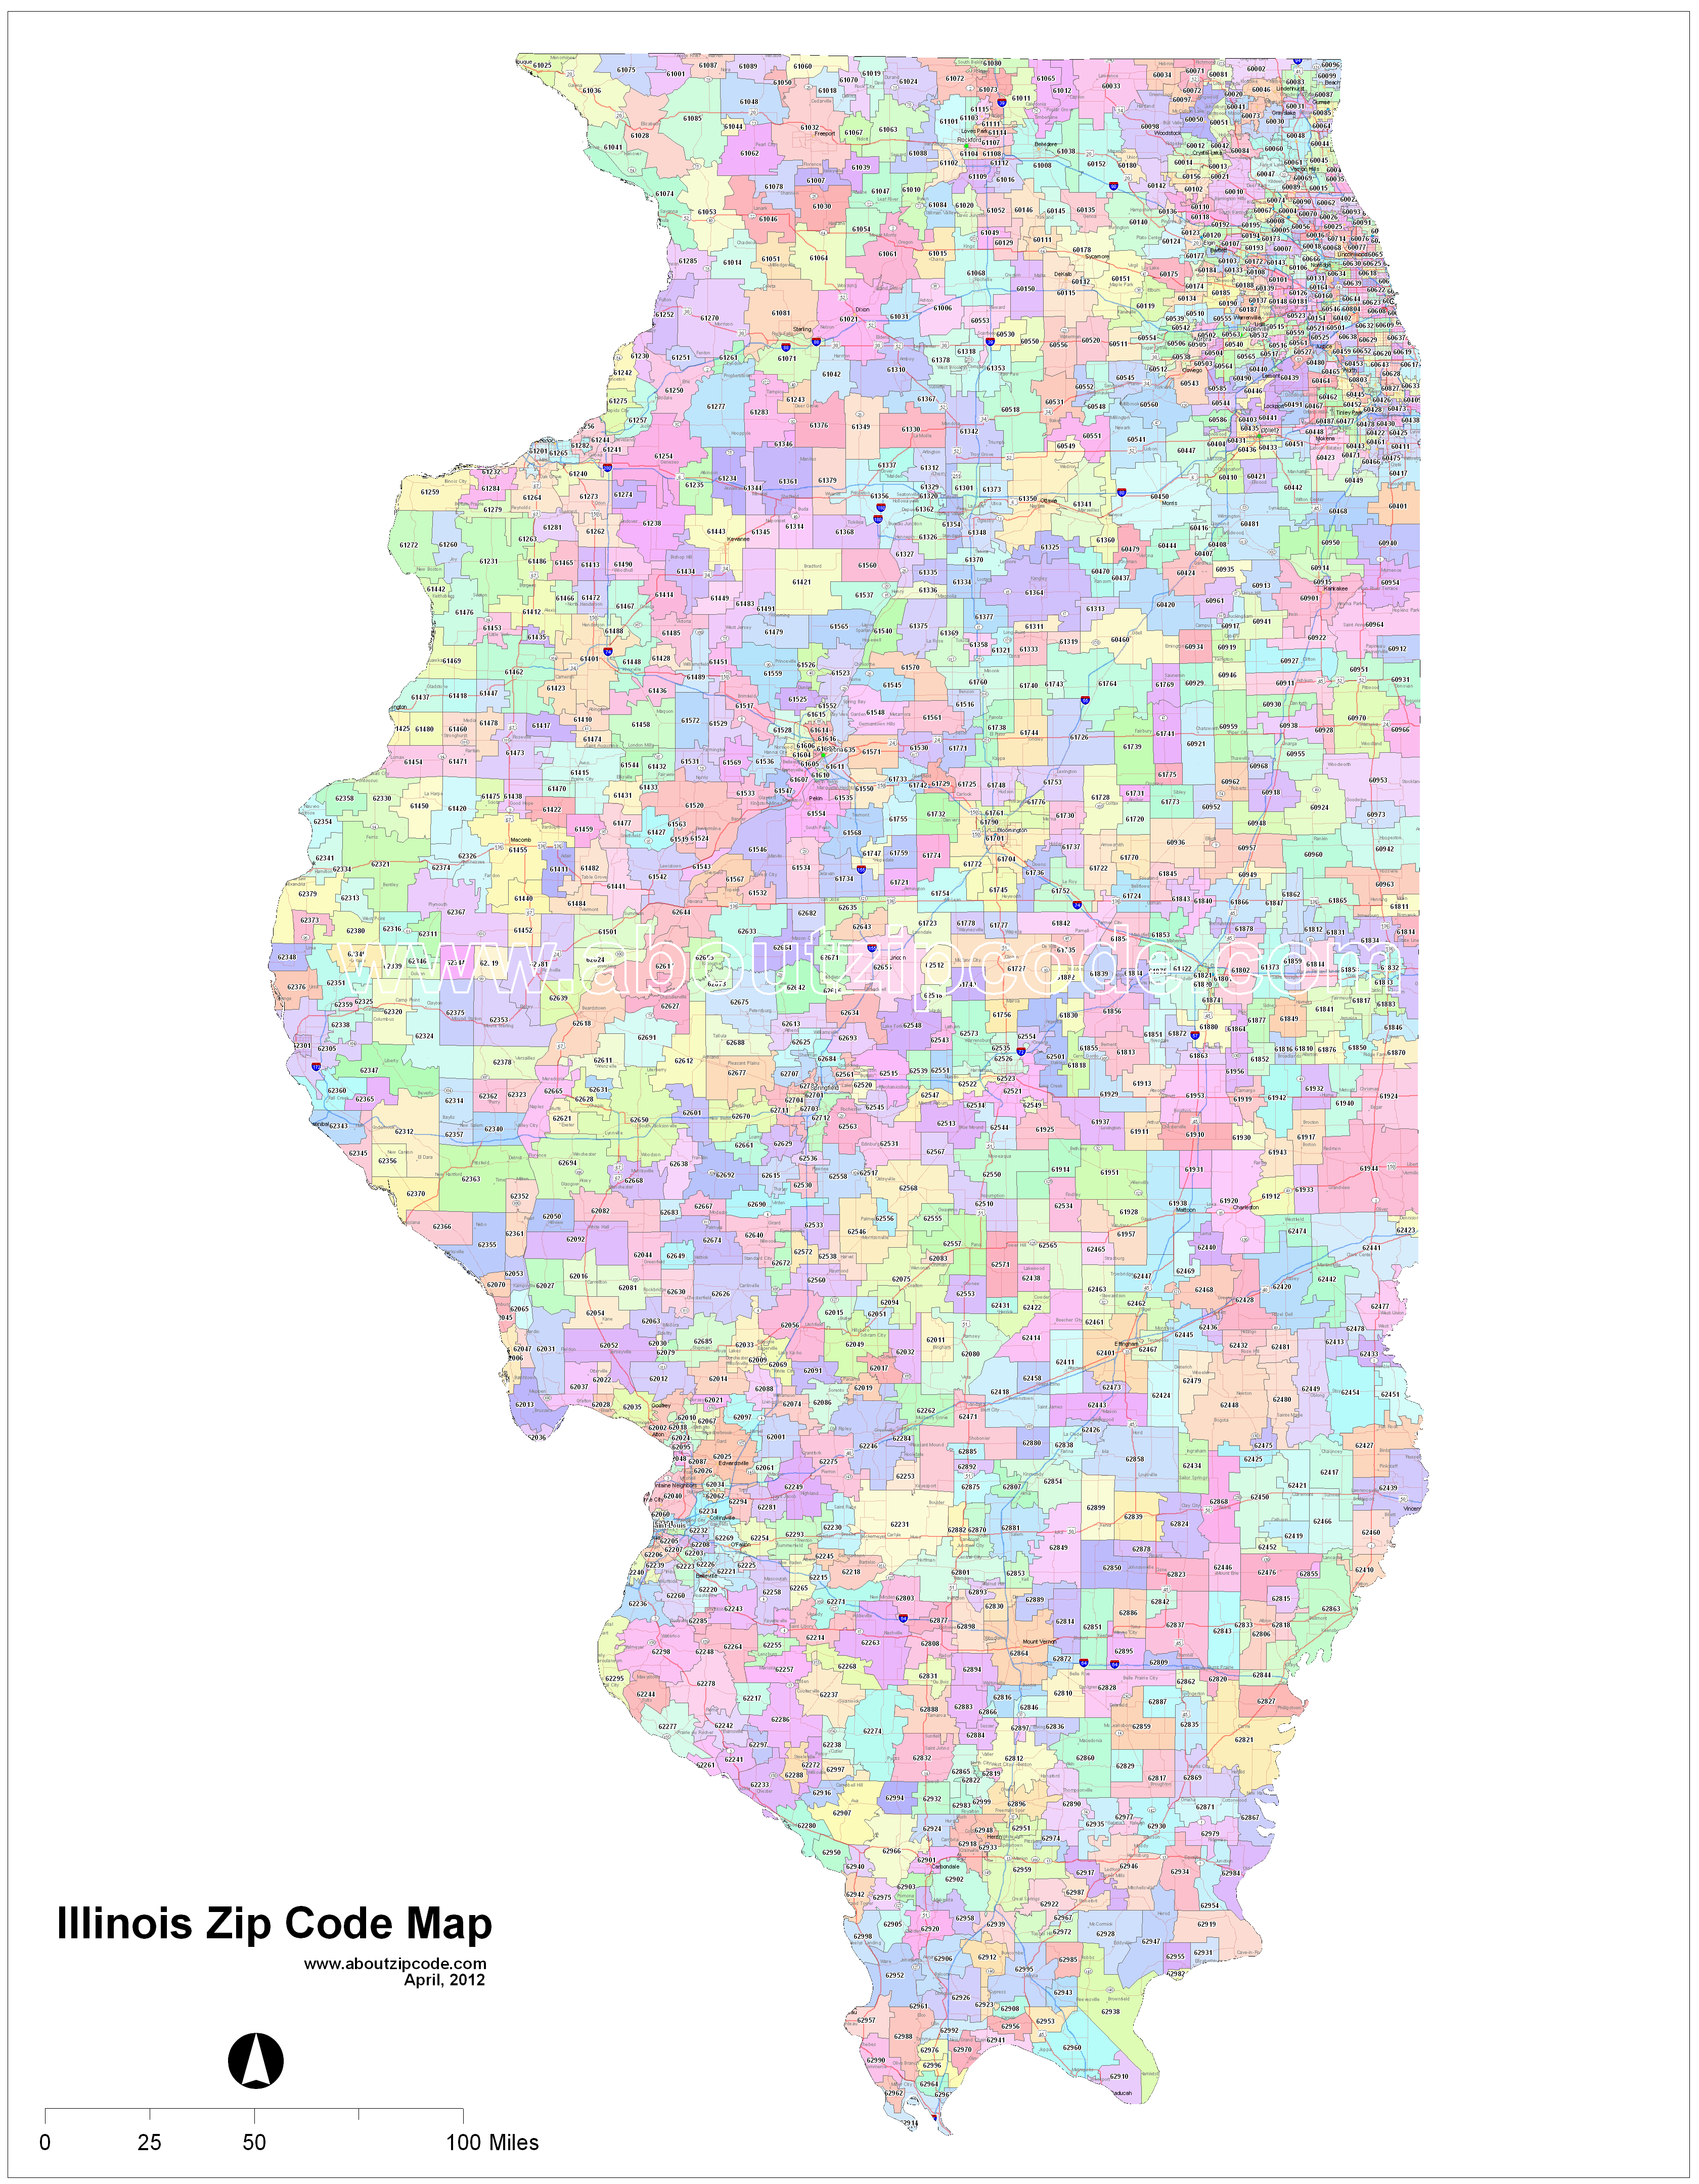 peoria il zip code map Illinois Zip Code Maps Free Illinois Zip Code Maps peoria il zip code map